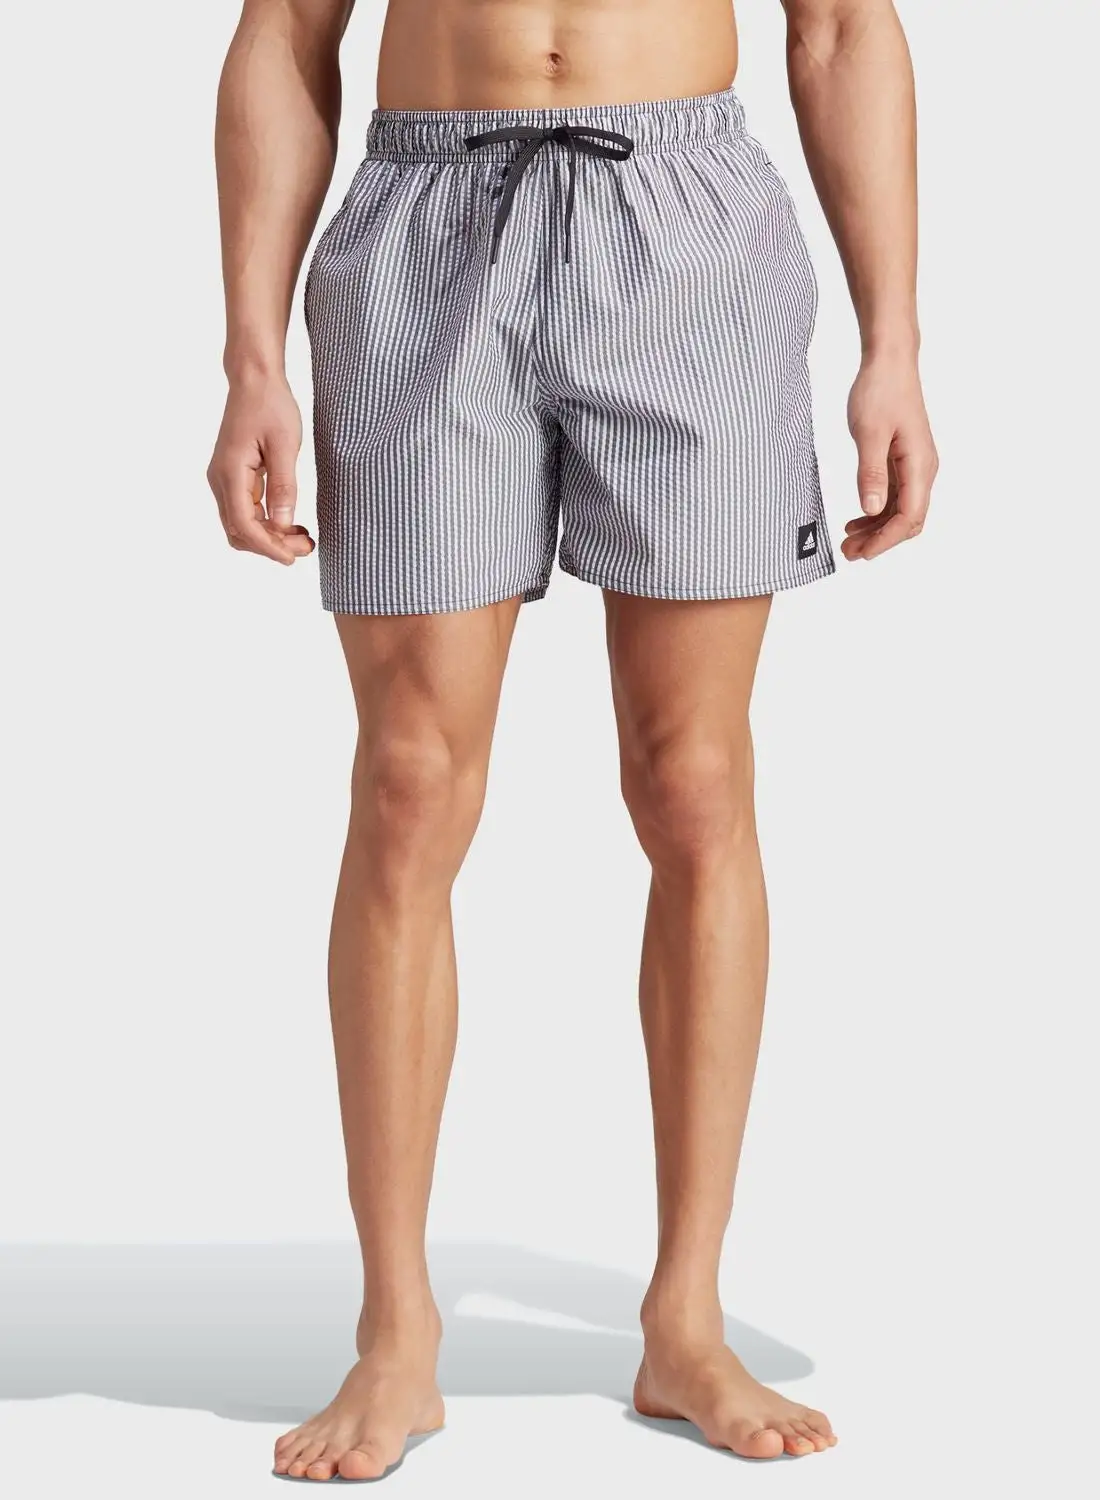 Adidas Striped Swim Shorts Shorts Length